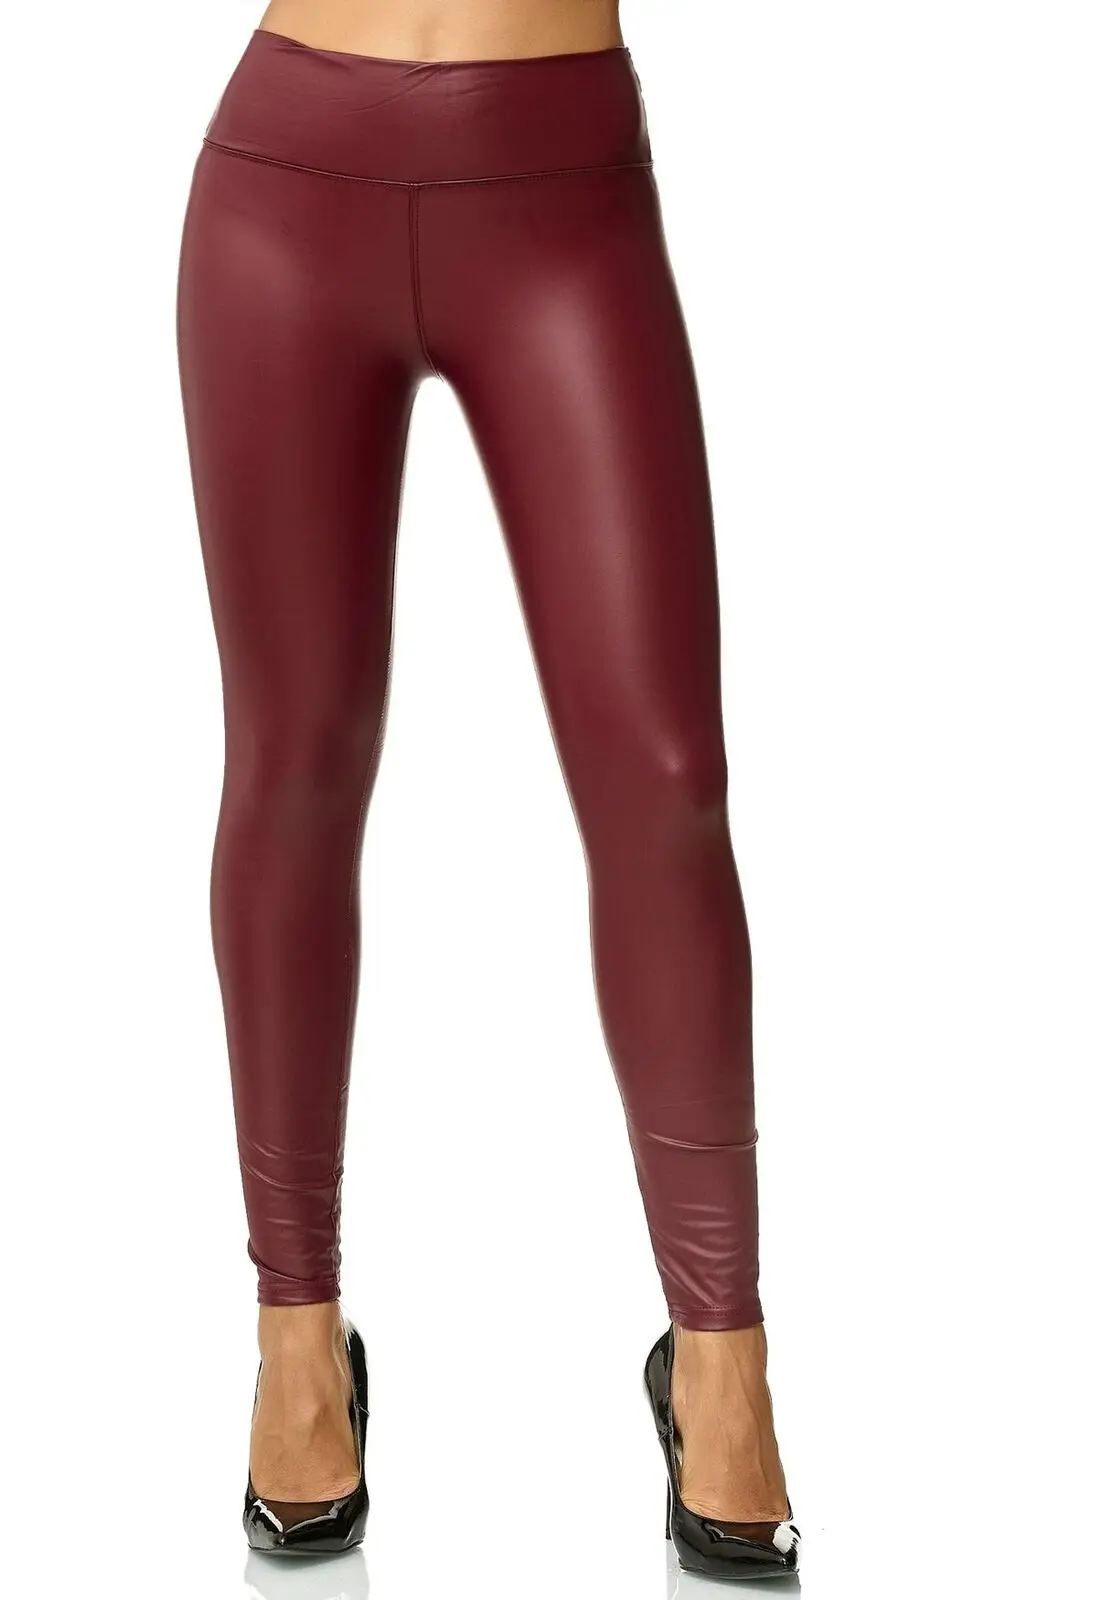 

ZOGAA 2020 New Women Leggings Metallic Leather High Waist Wet Stretch Shine Pants Slim Fit Lady Sexy Trousers Pencil Pants